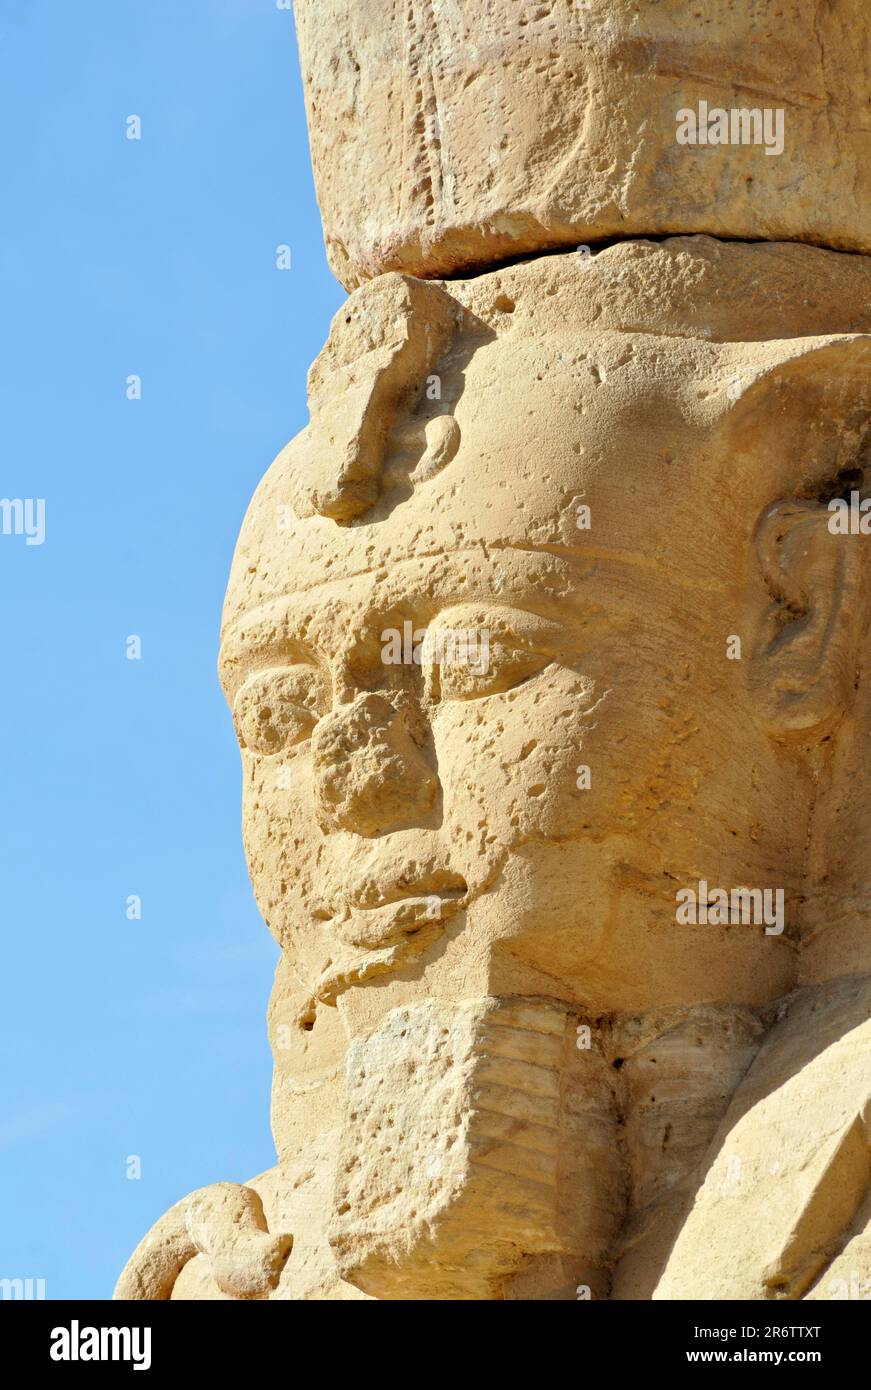 Statue of Ramses II the Great, courtyard, ancient Nubian Gerf Hussein Temple, Kalabsha Island, near Aswan Dam, Lake Nasser, Egypt Stock Photo